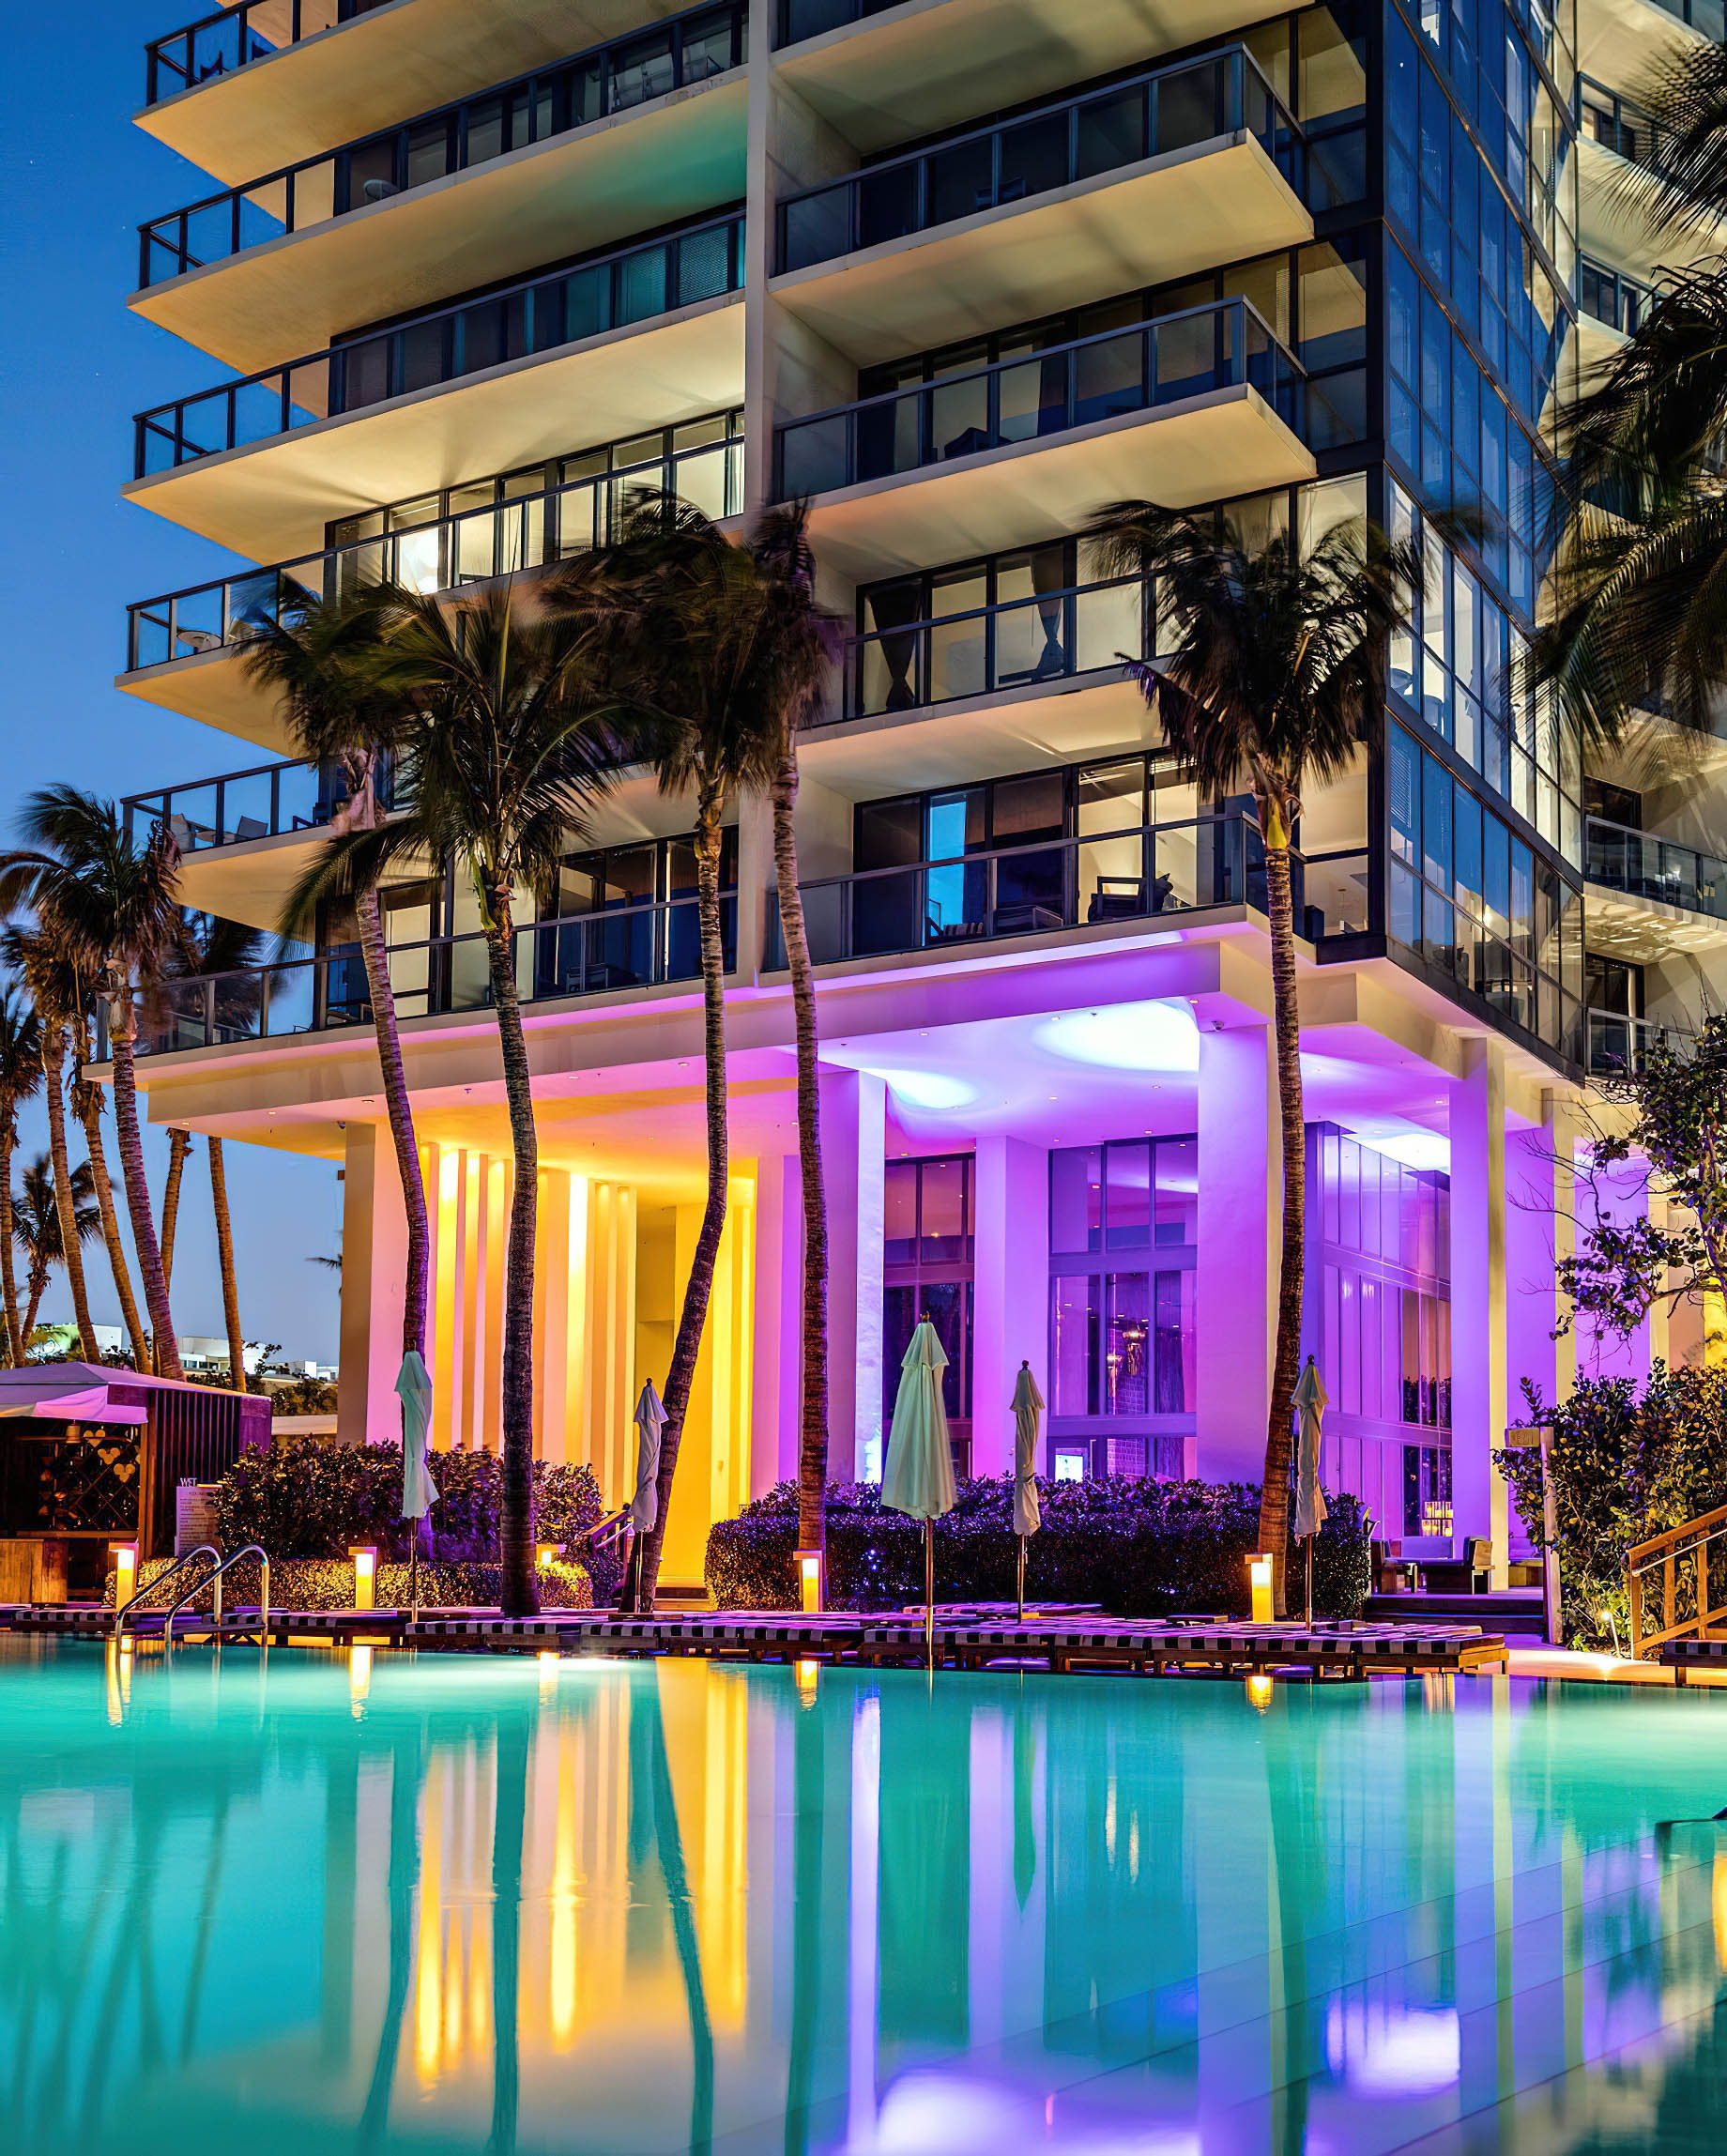 W South Beach Hotel - Miami Beach, FL, USA - Poolside Night View